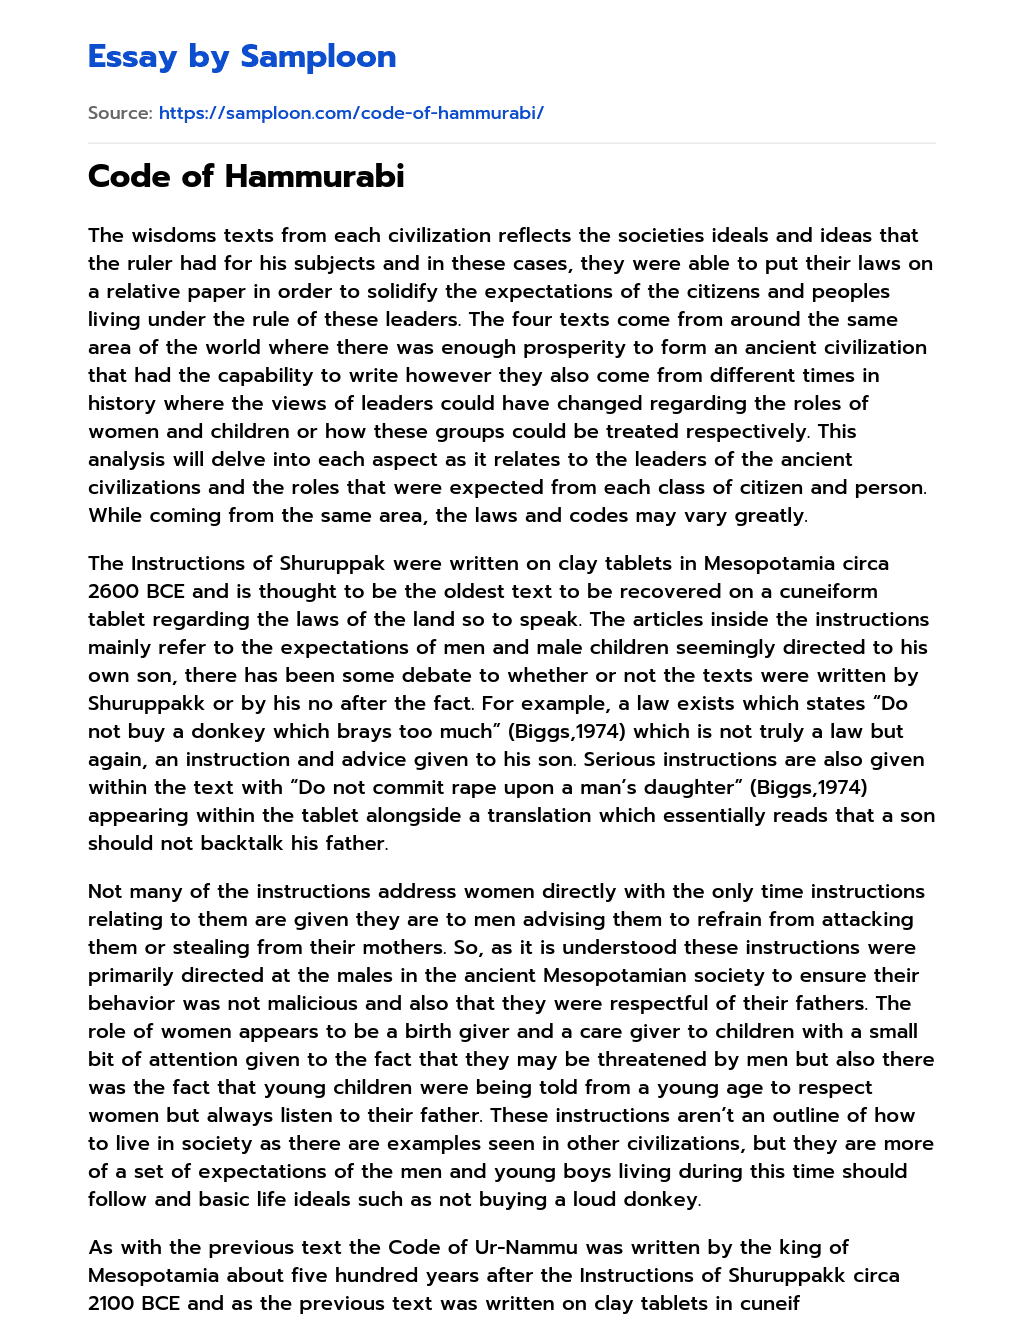 Code of Hammurabi essay